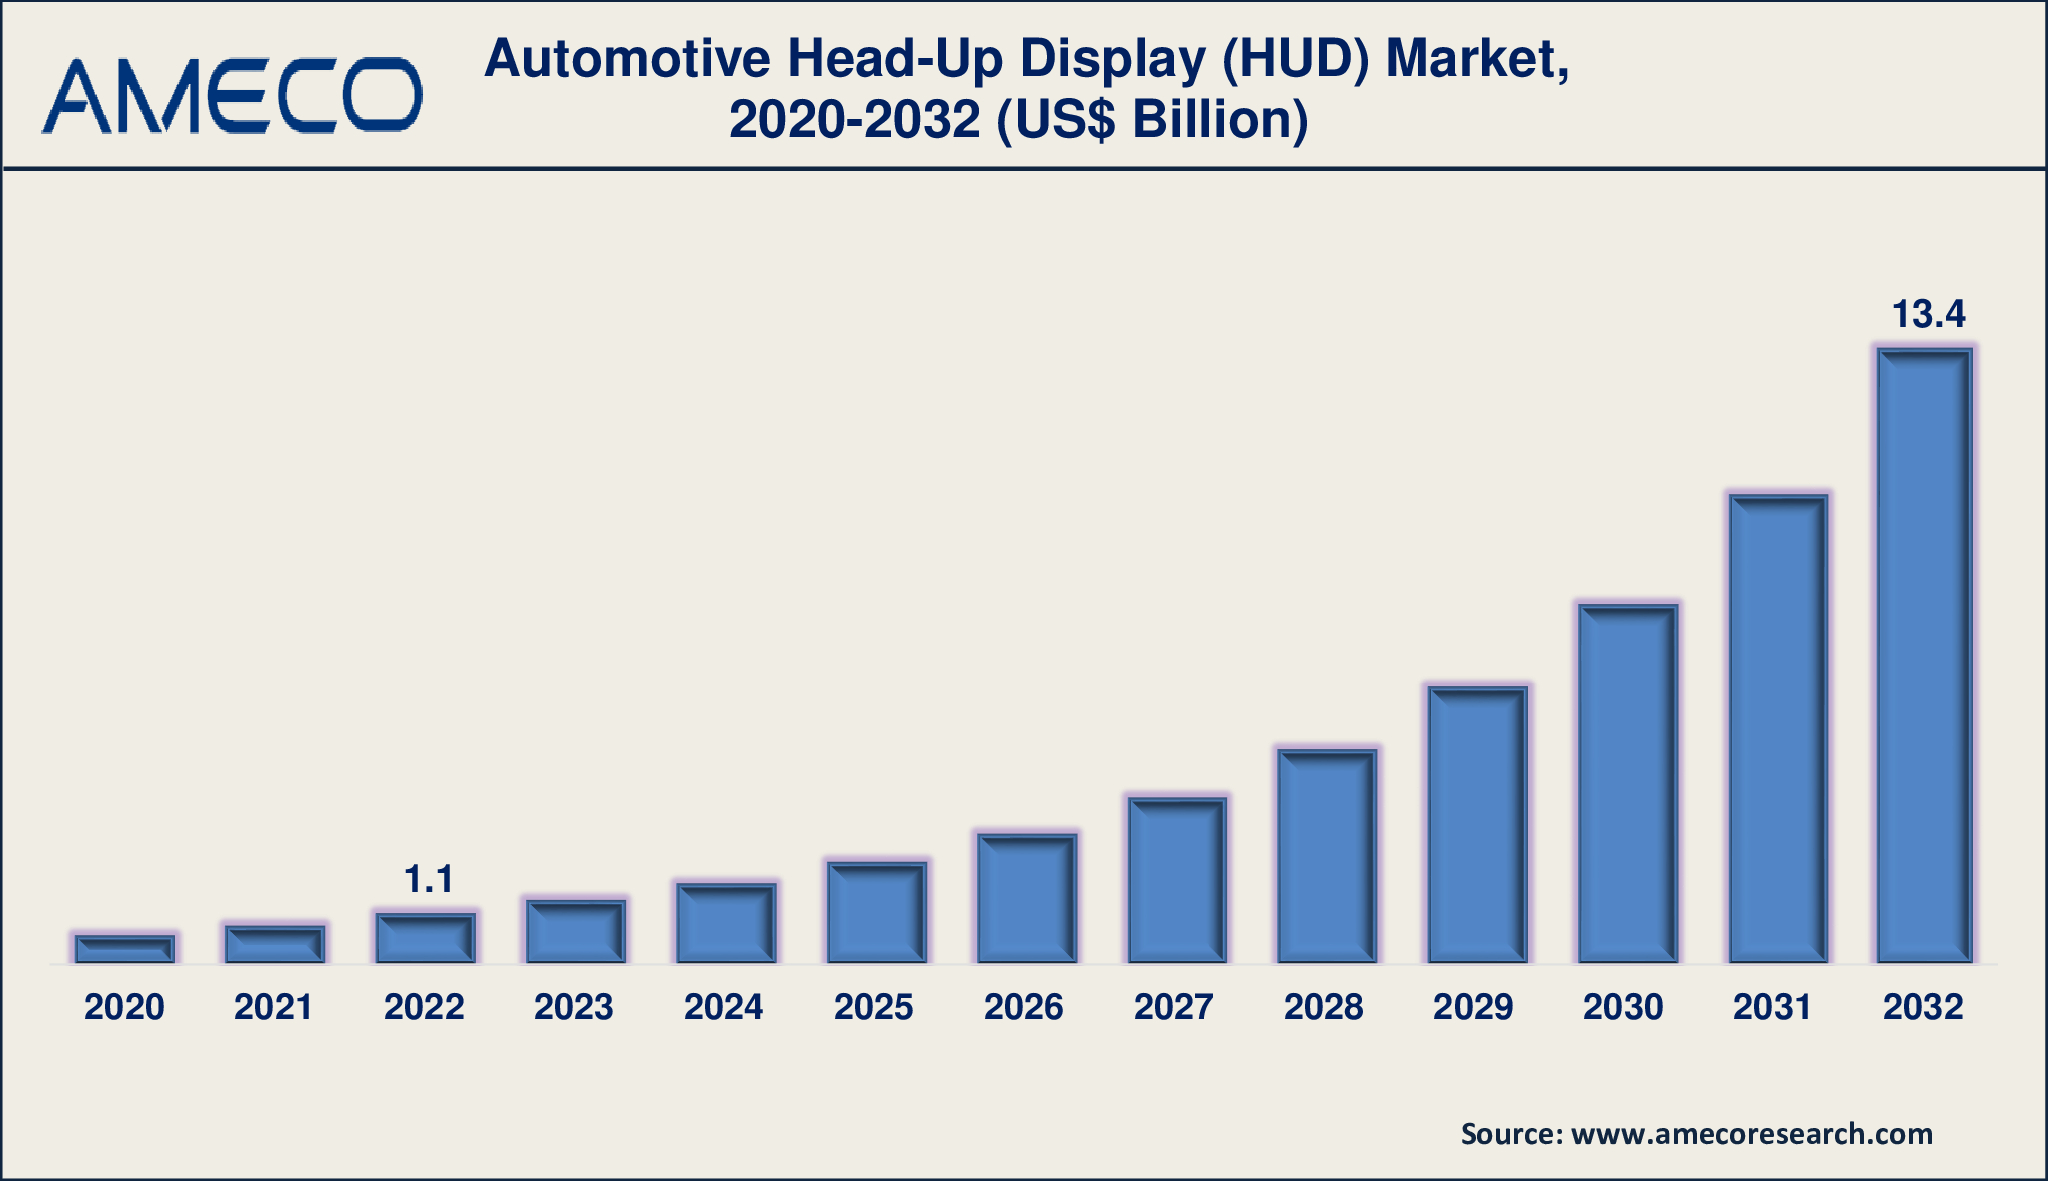 Automotive Head-Up Display (HUD) Market Dynamics